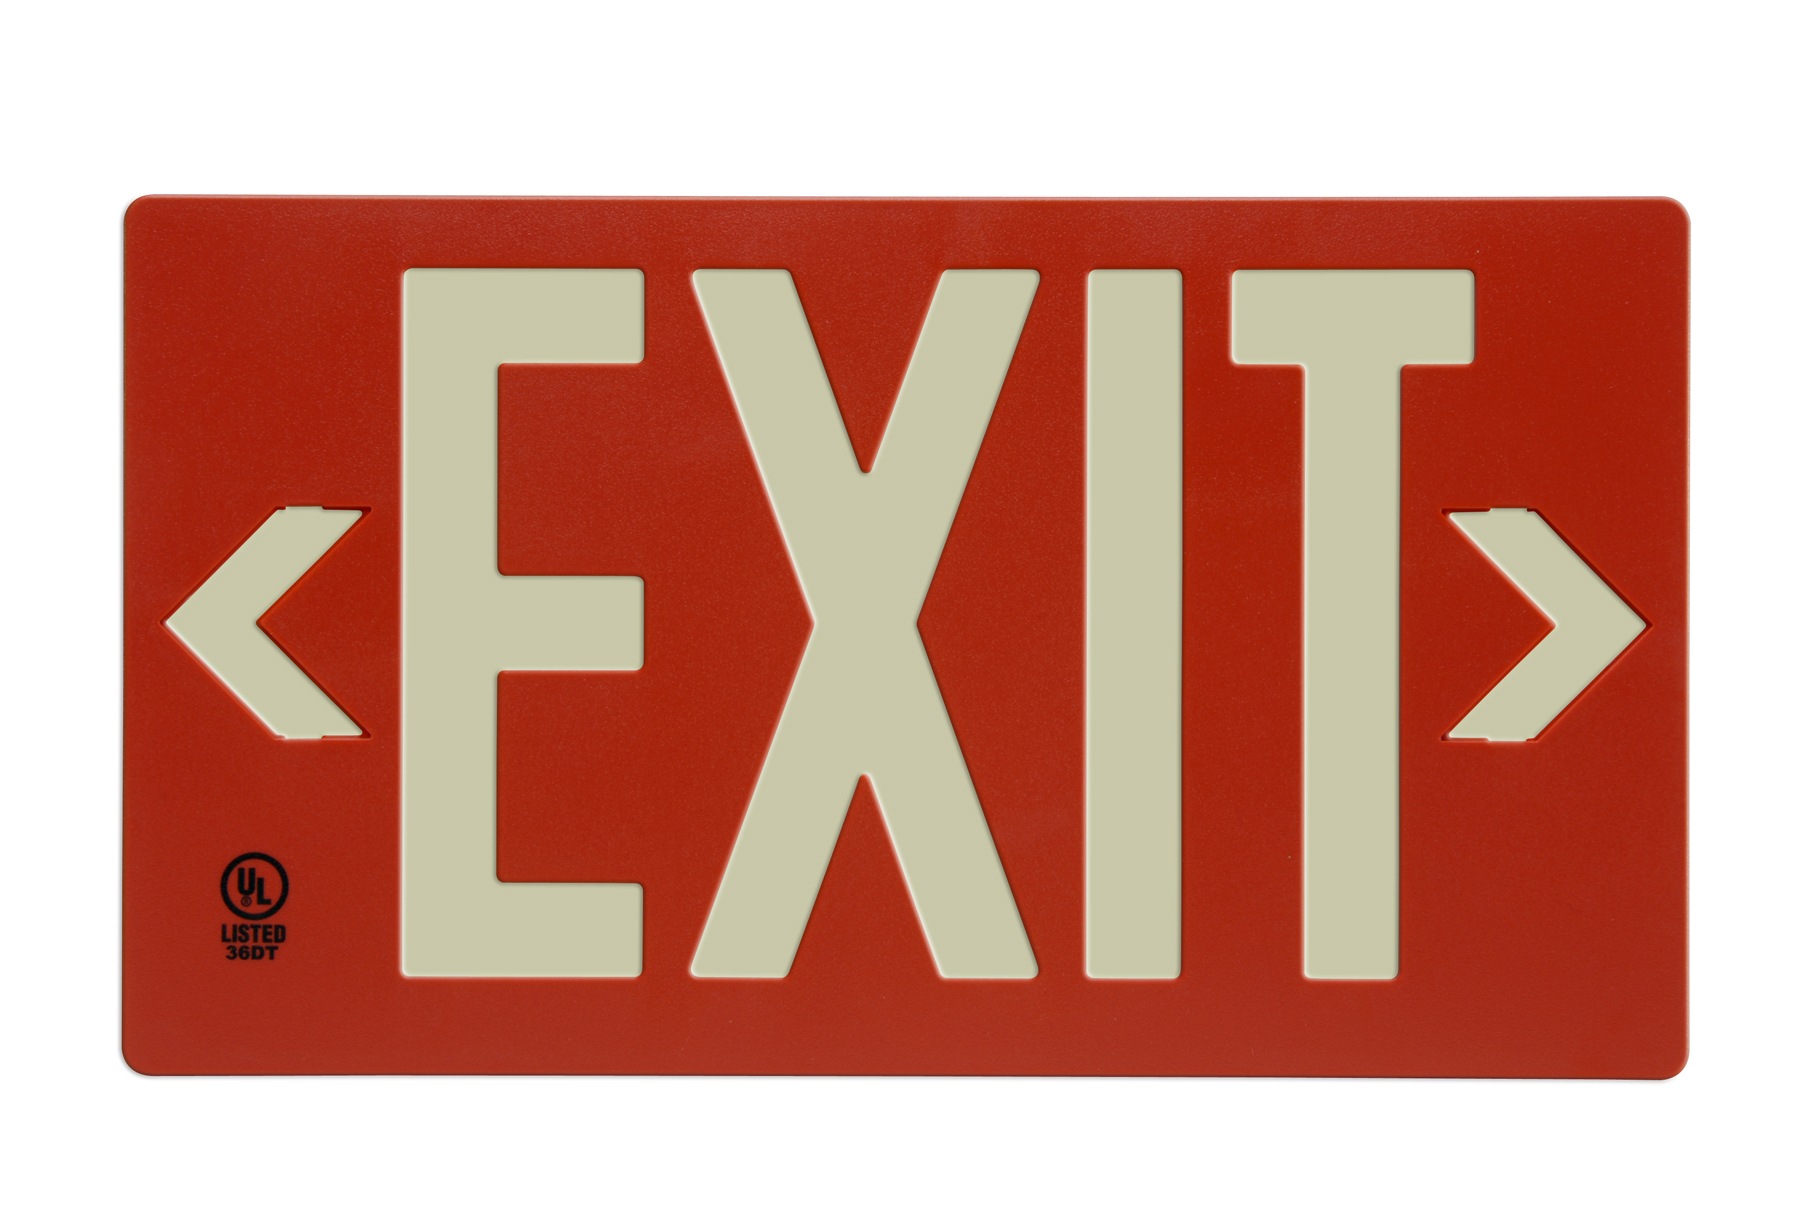 Exit Sign Clipart